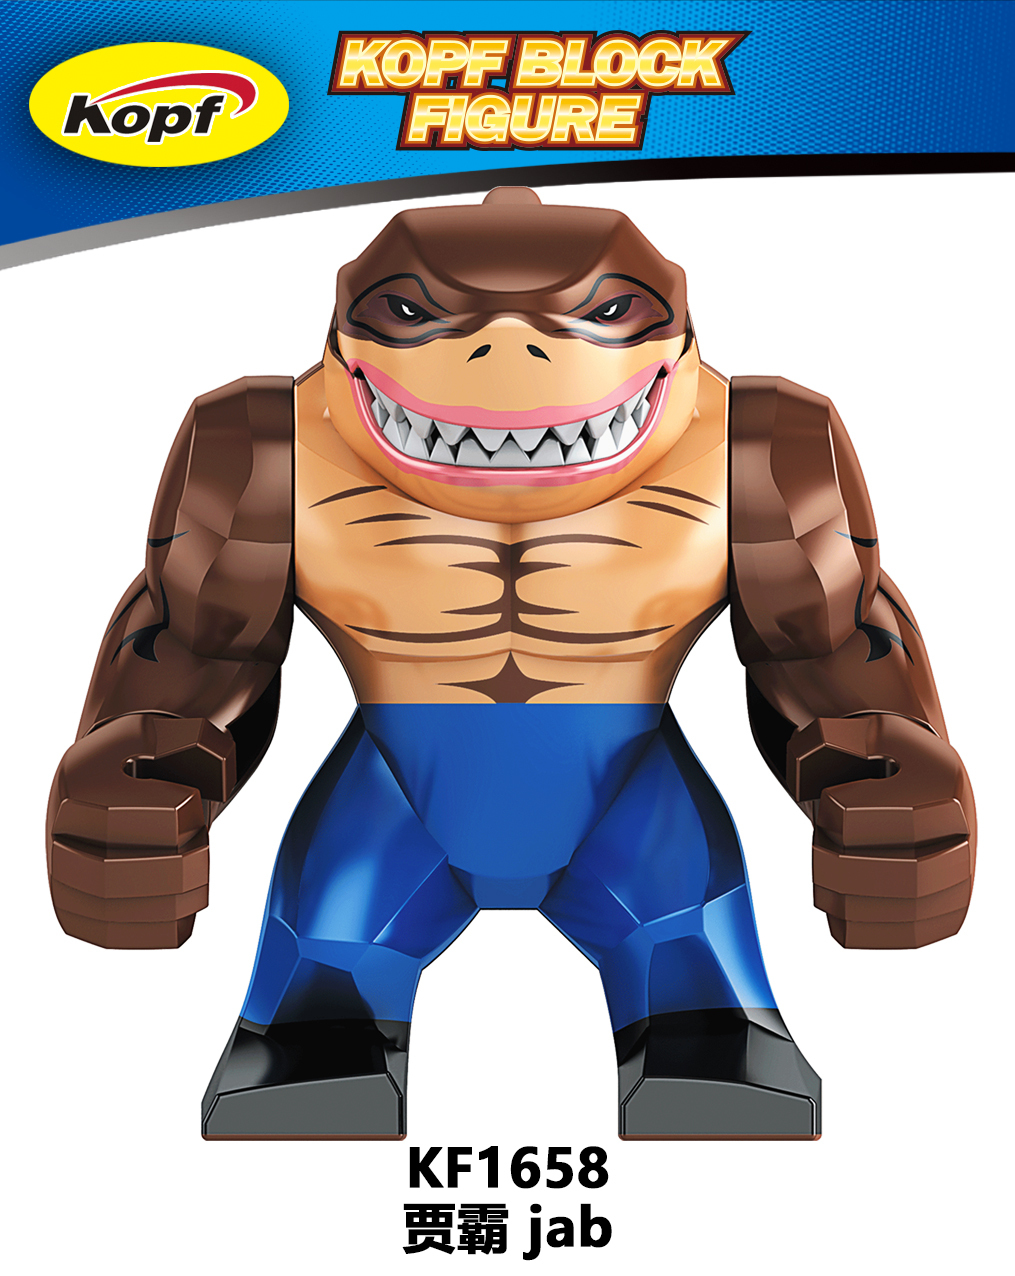 Big Figures Super Heroes Lizard Venom Carnage Movie Series Building Blocks Action Figures Educational Toys For Kids Gifts